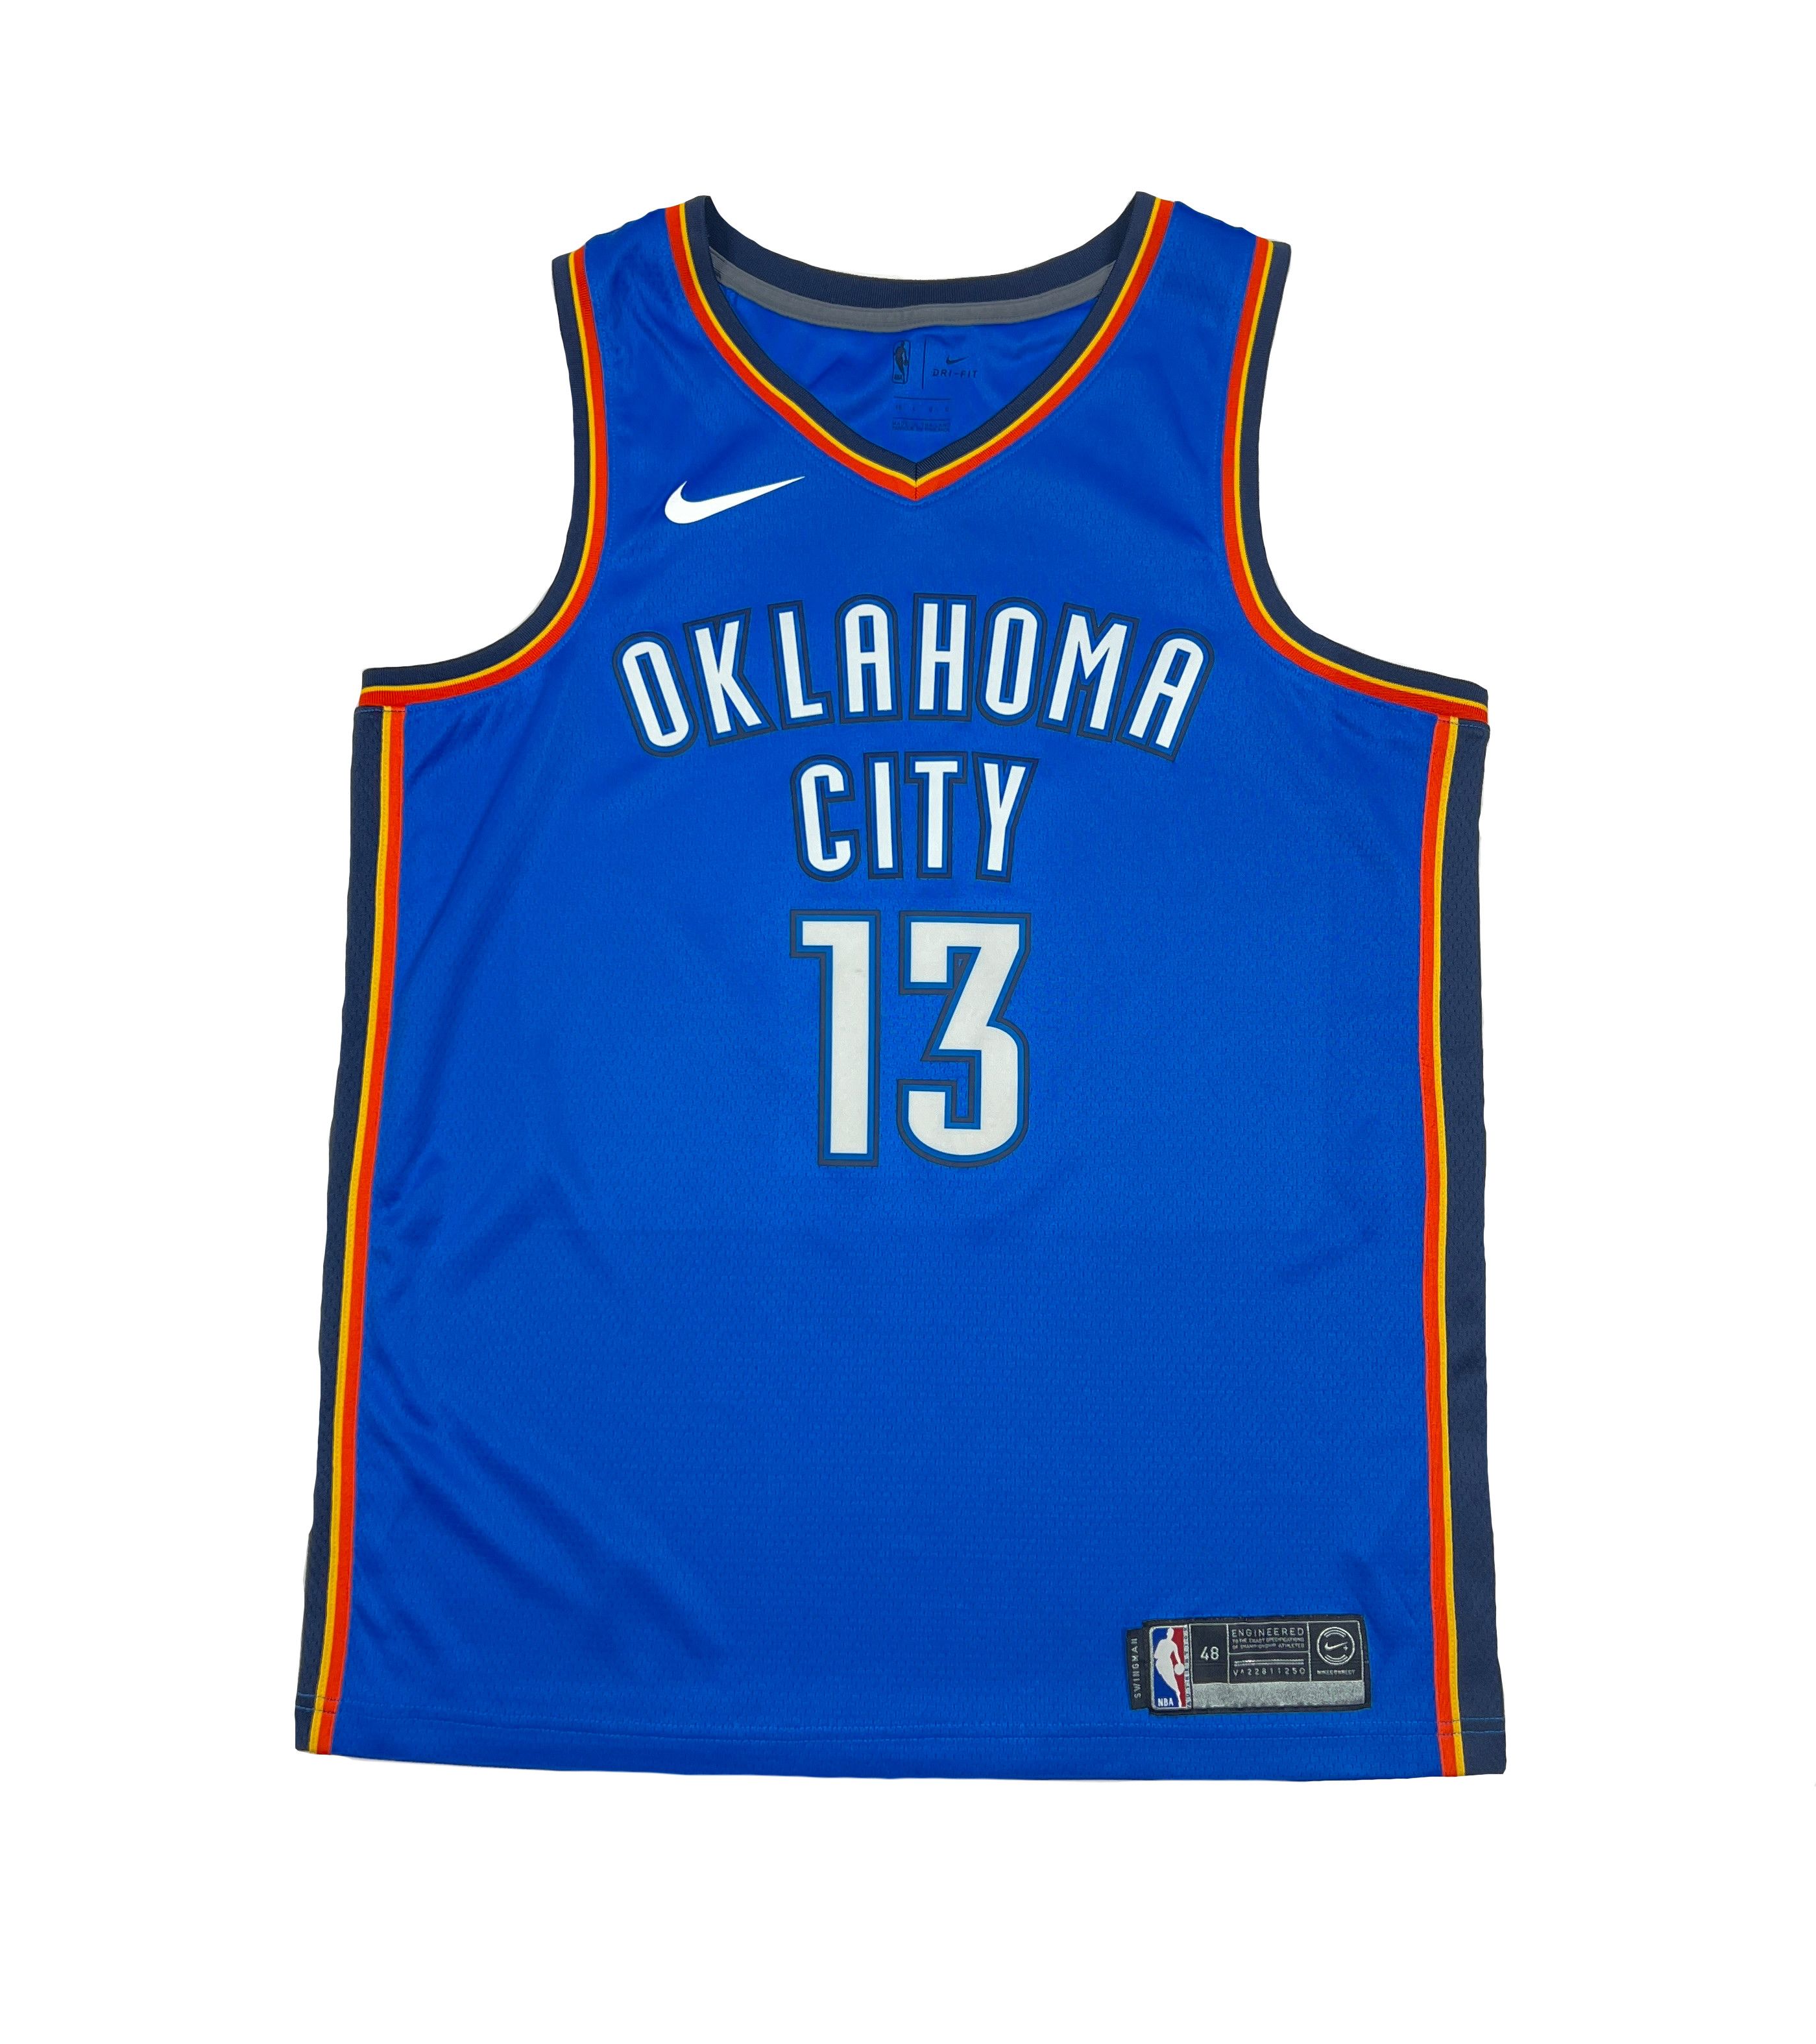 Nike Nike Oklahoma City Thunder #13 PAUL GEORGE Basketball Jersey Size US L / EU 52-54 / 3 - 1 Preview